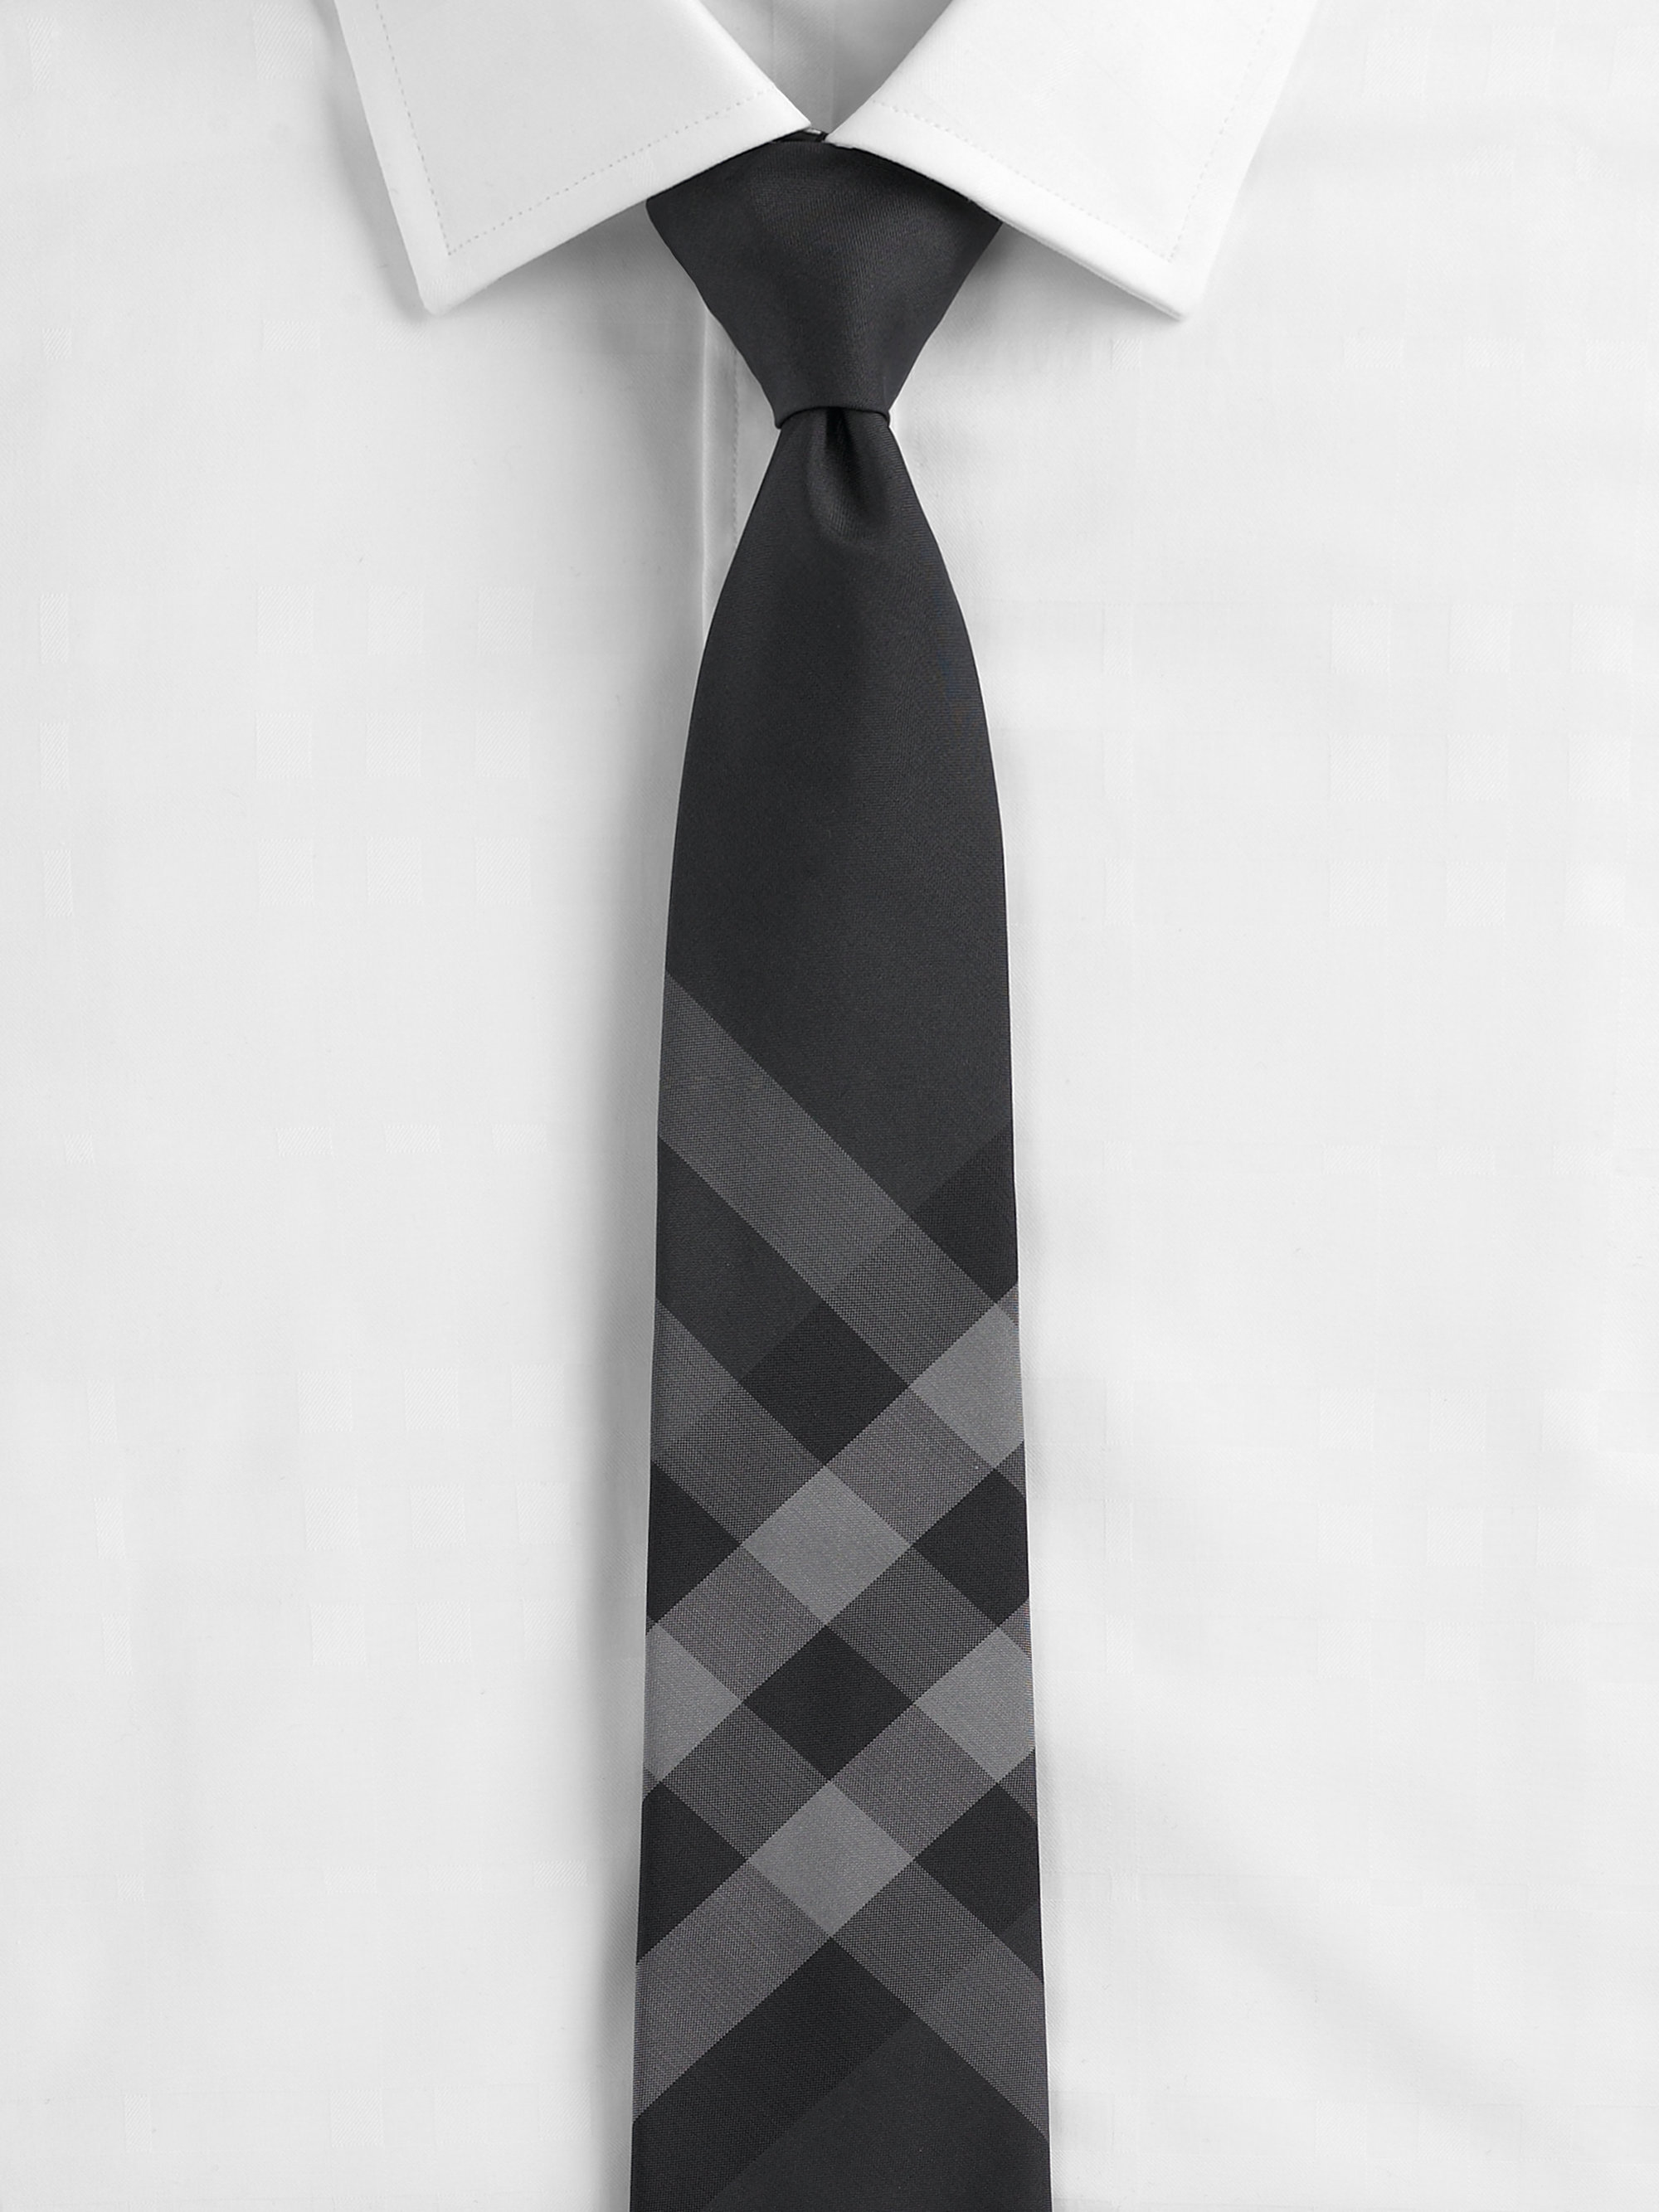 burberry tie price